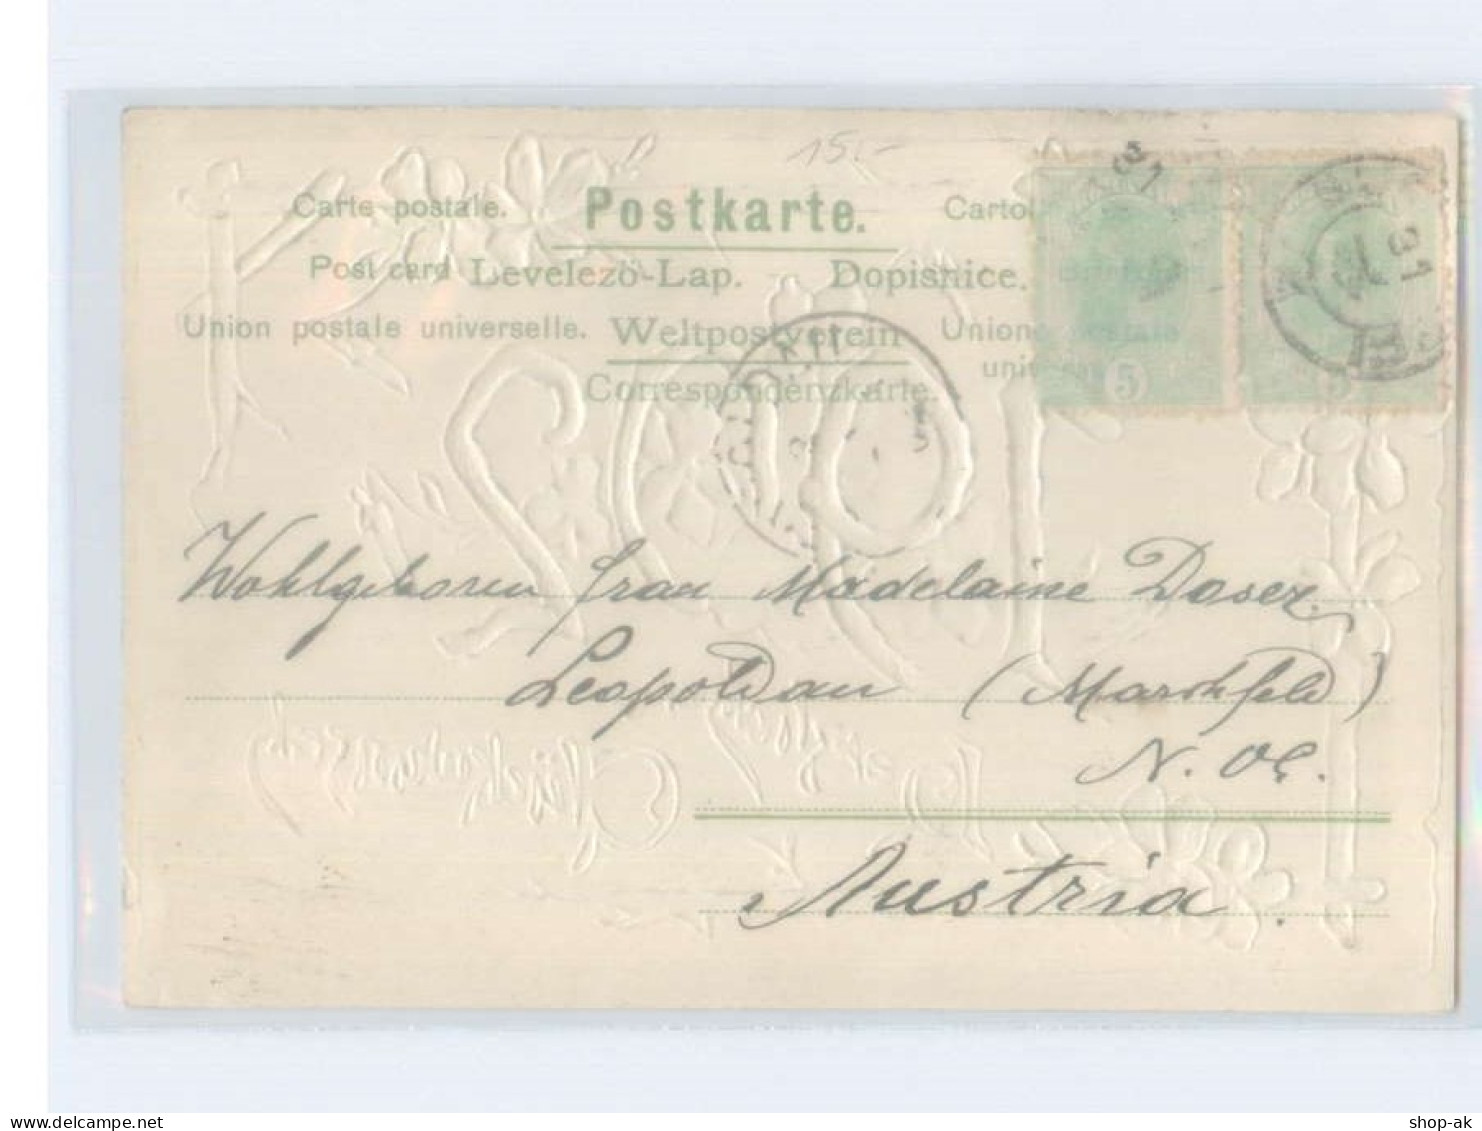 Y4869/ Neujahr Jahreszahl 1902  Litho Prägedruck AK  - Nieuwjaar